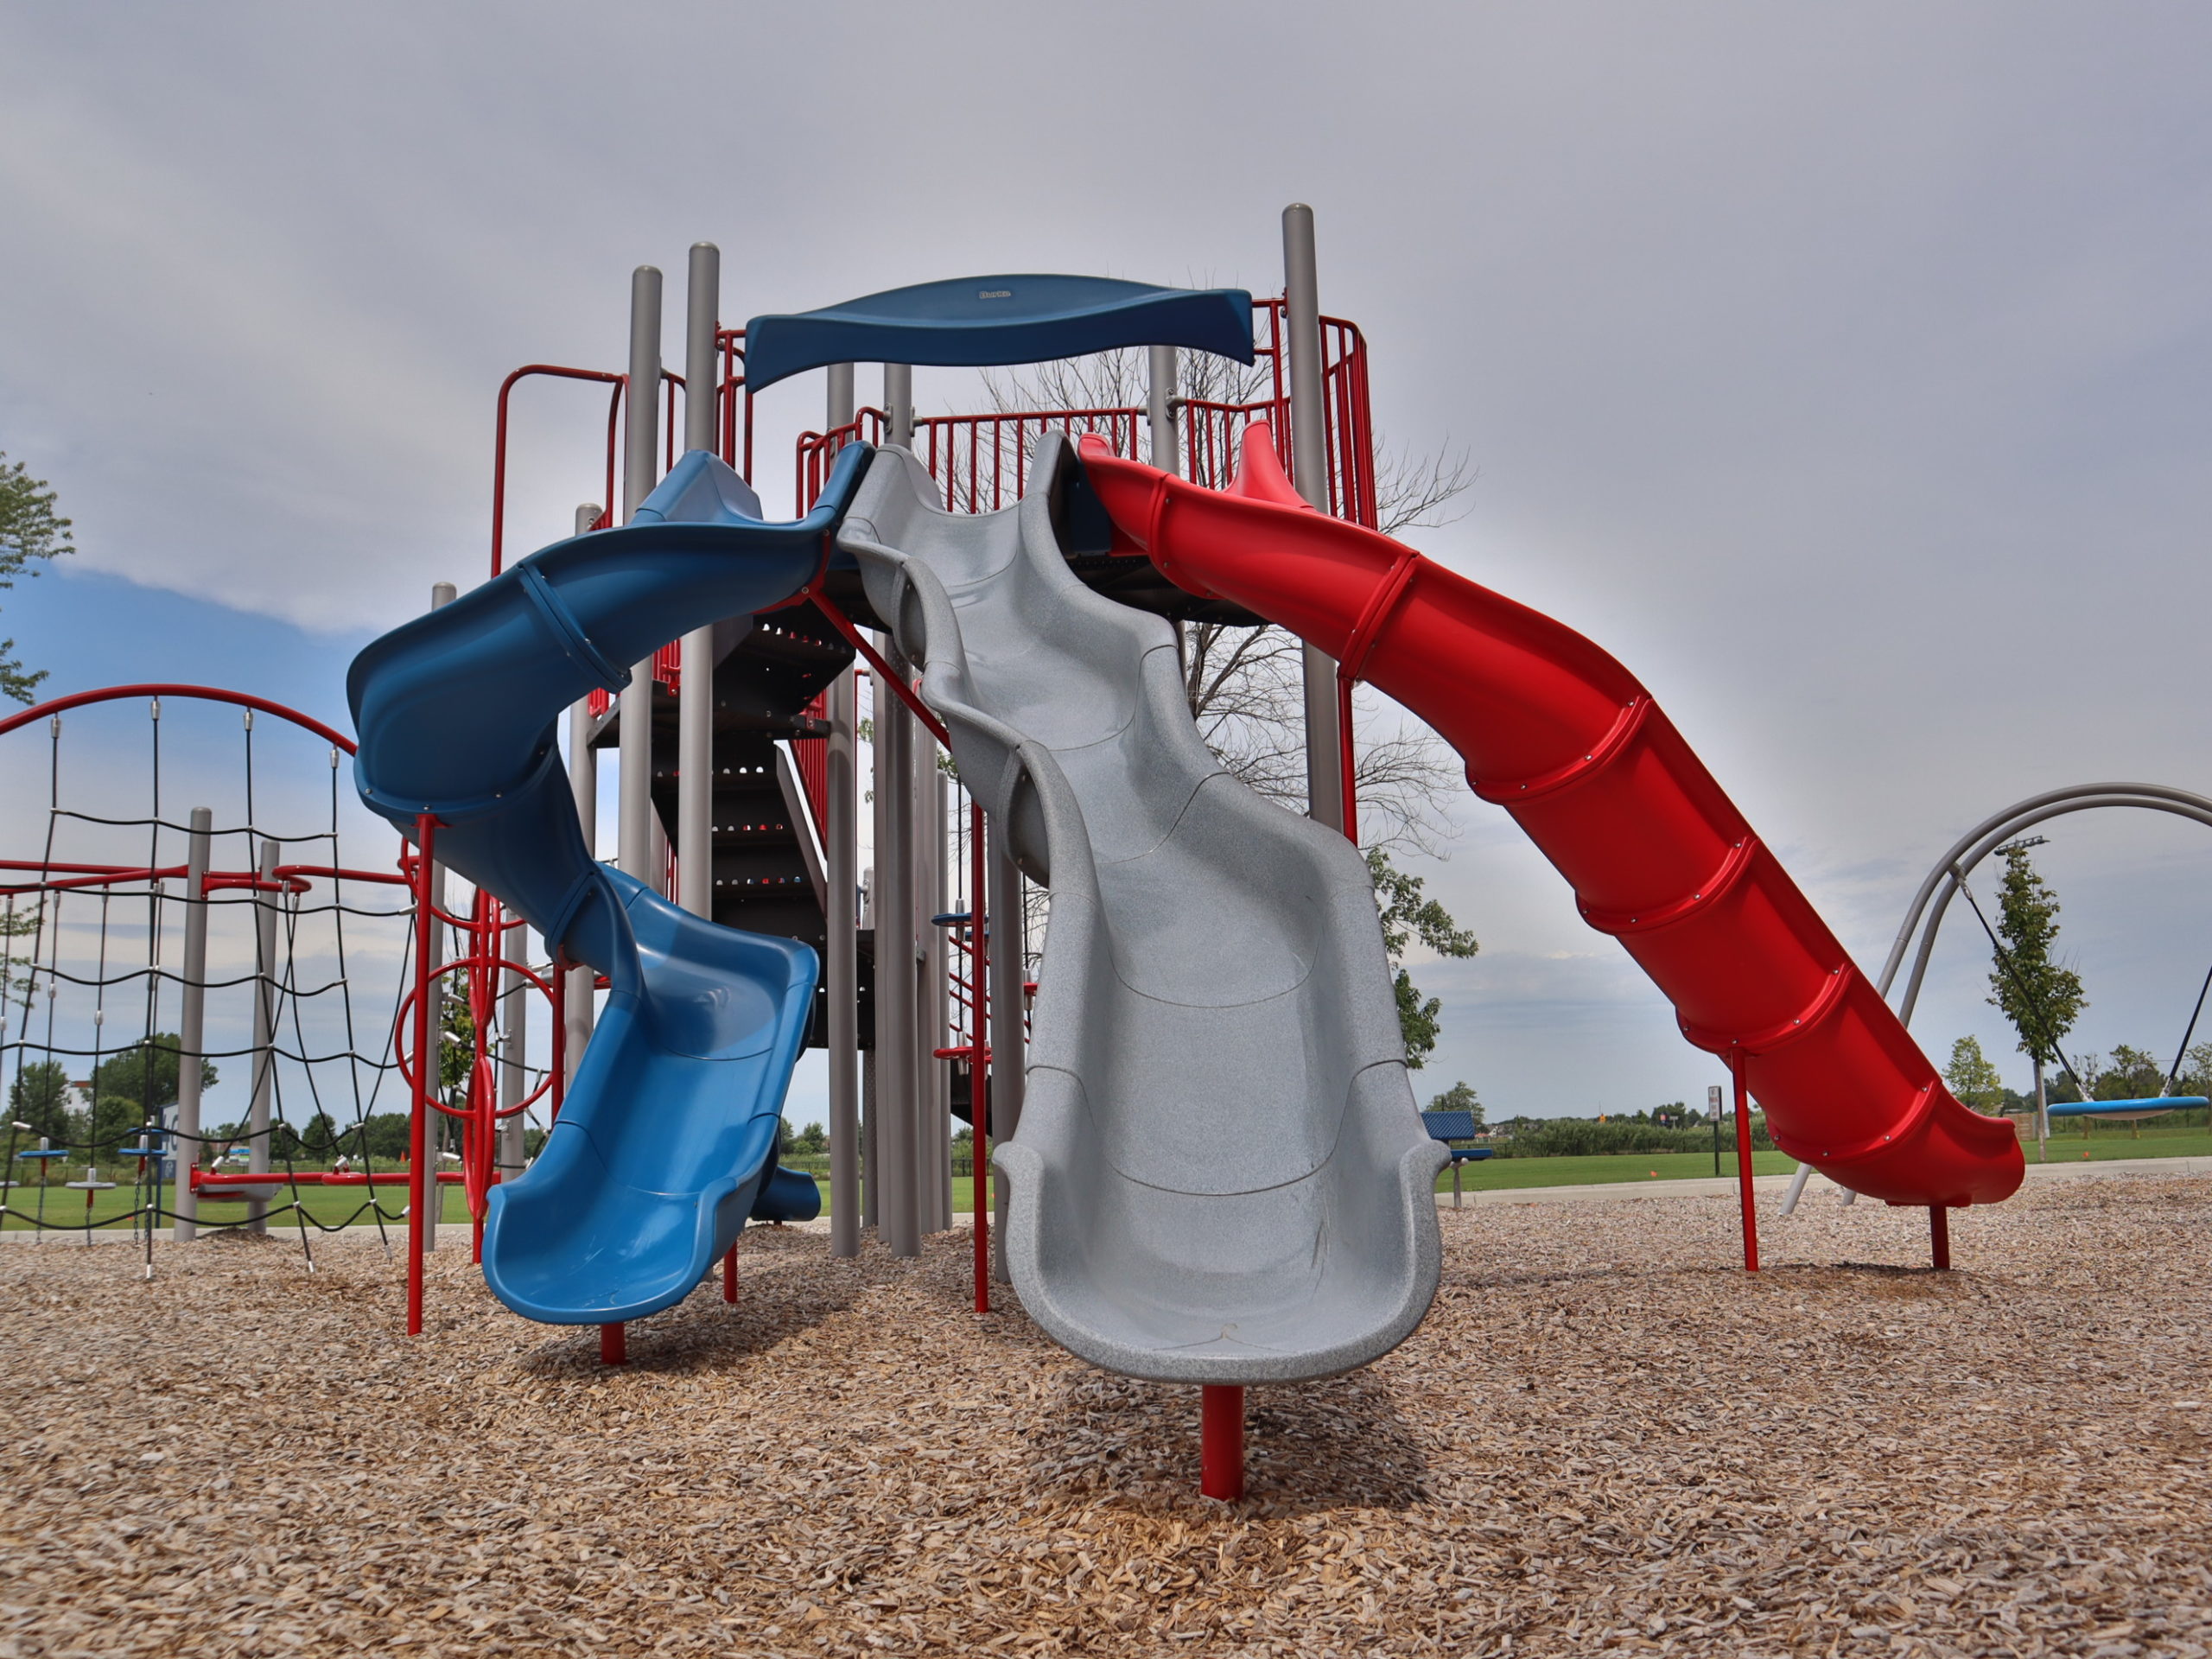 Centerview Elementary School Playground in Spring Lake Park, MN